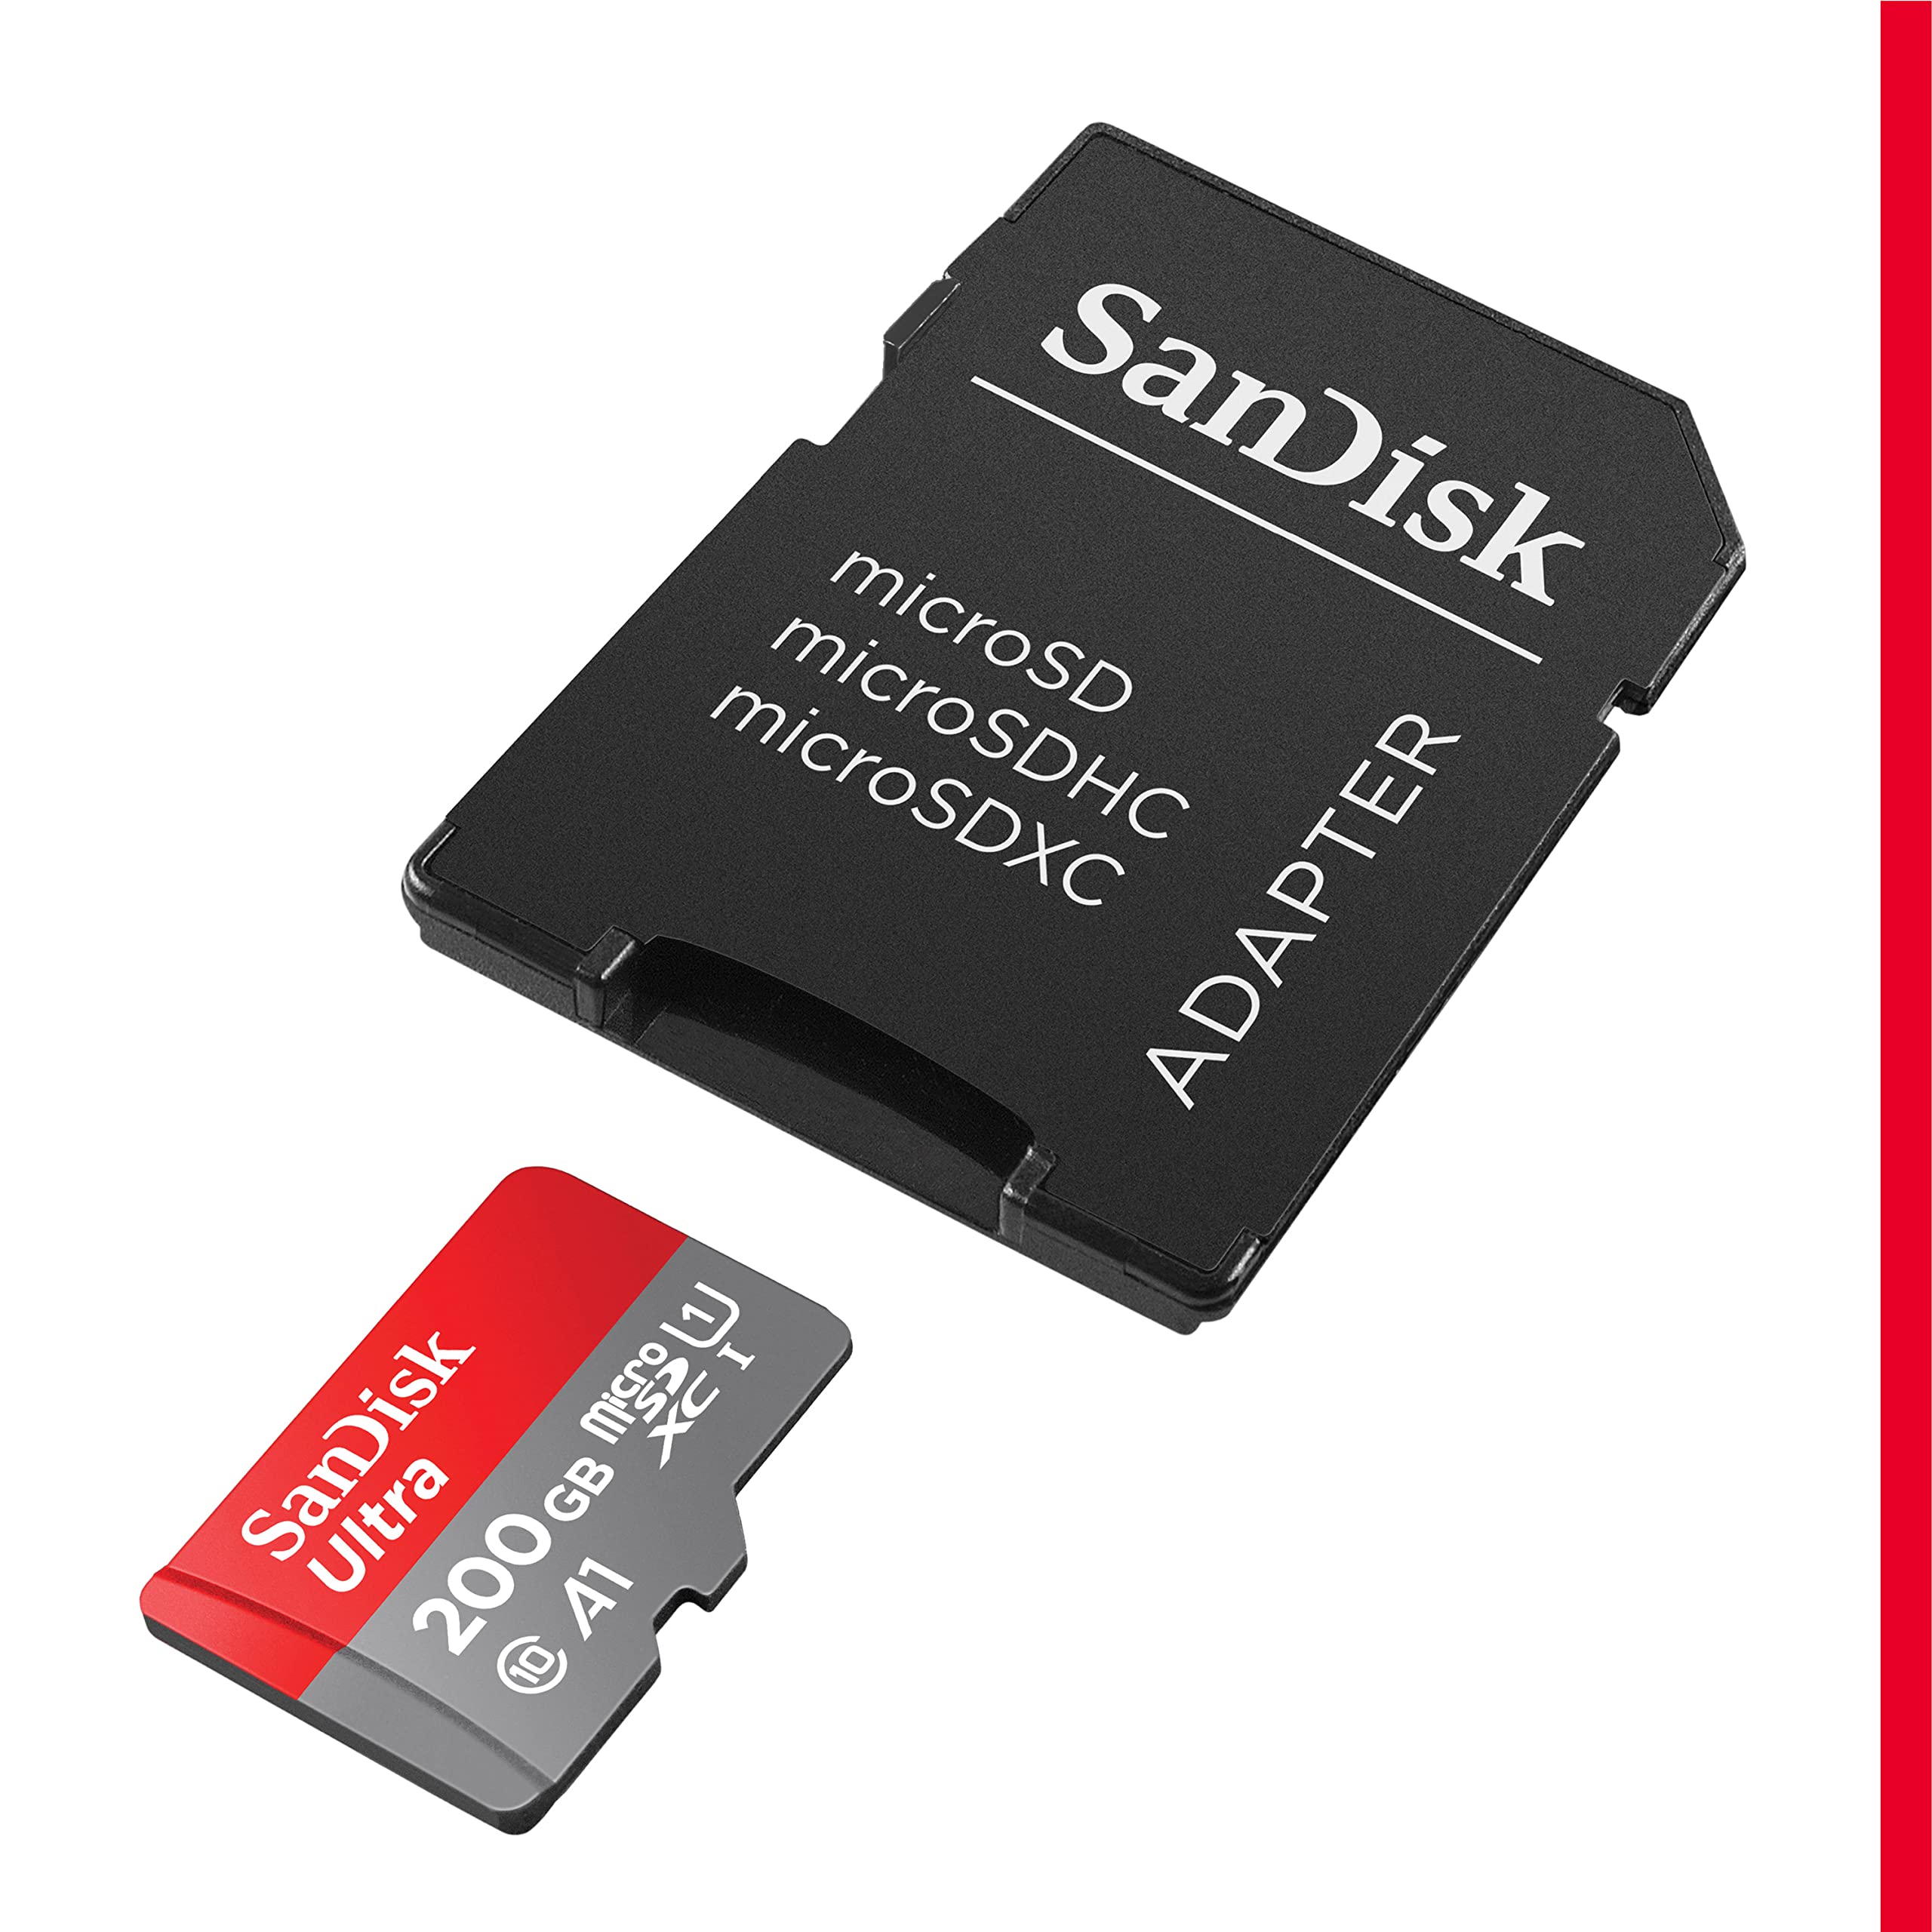 SanDisk 200GB Ultra microSDXC UHS-I Memory Card with Adapter - 120MB/s, C10, U1, Full HD, A1, Micro SD Card - SDSQUA4-200G-GN6MA, Black